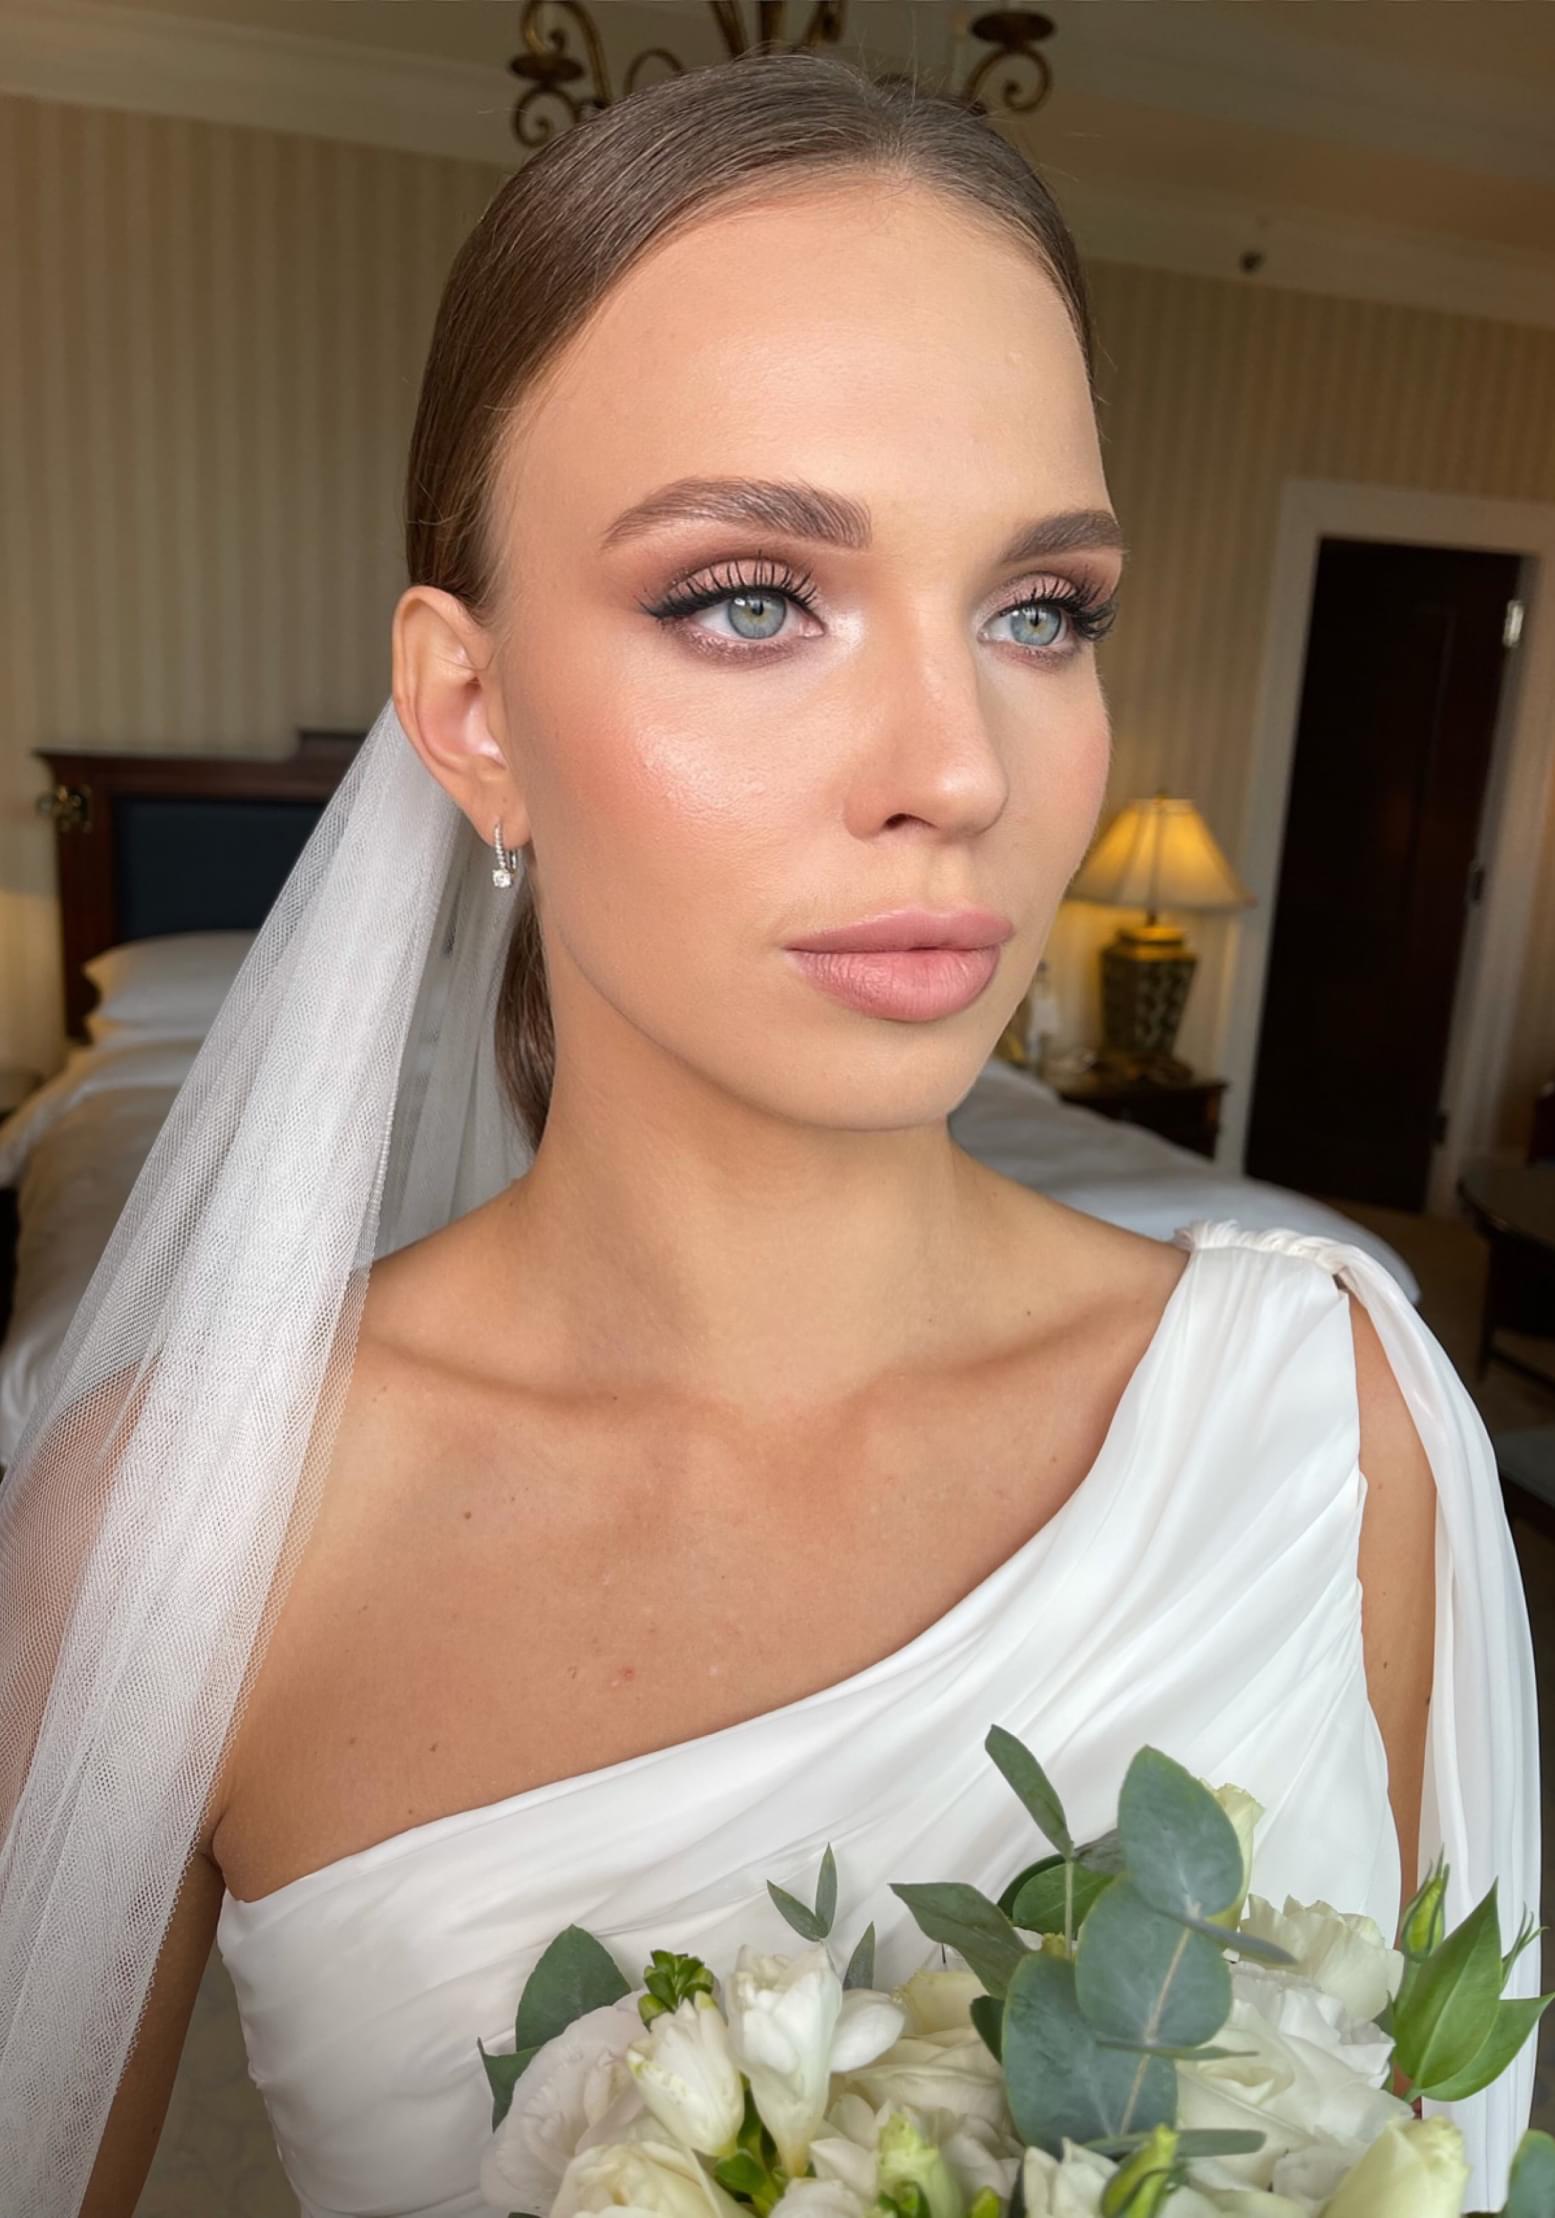 Girl with wedding make up